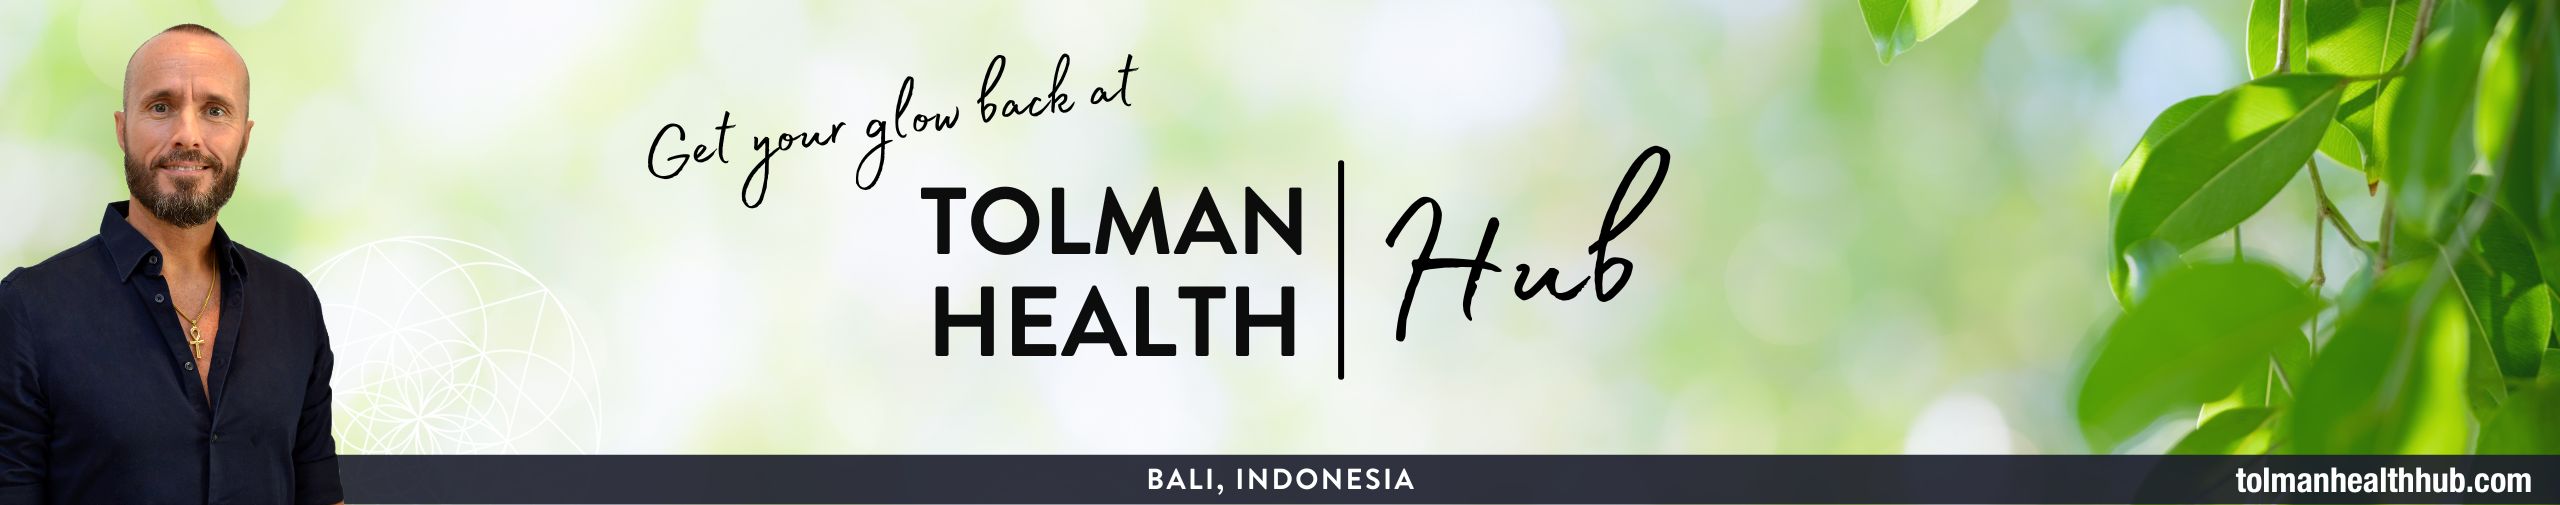 TOLMAN HEALTH HUB